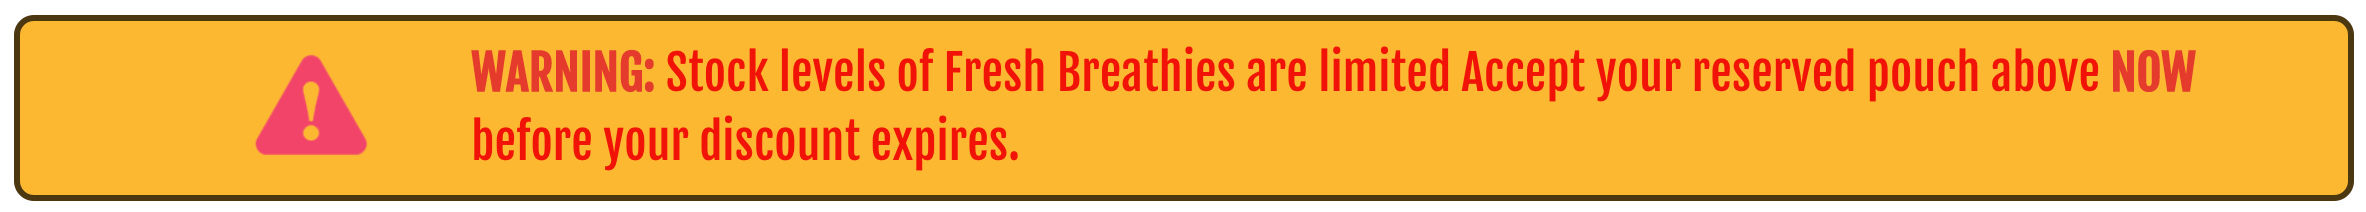 Fresh Breathies - WARNING